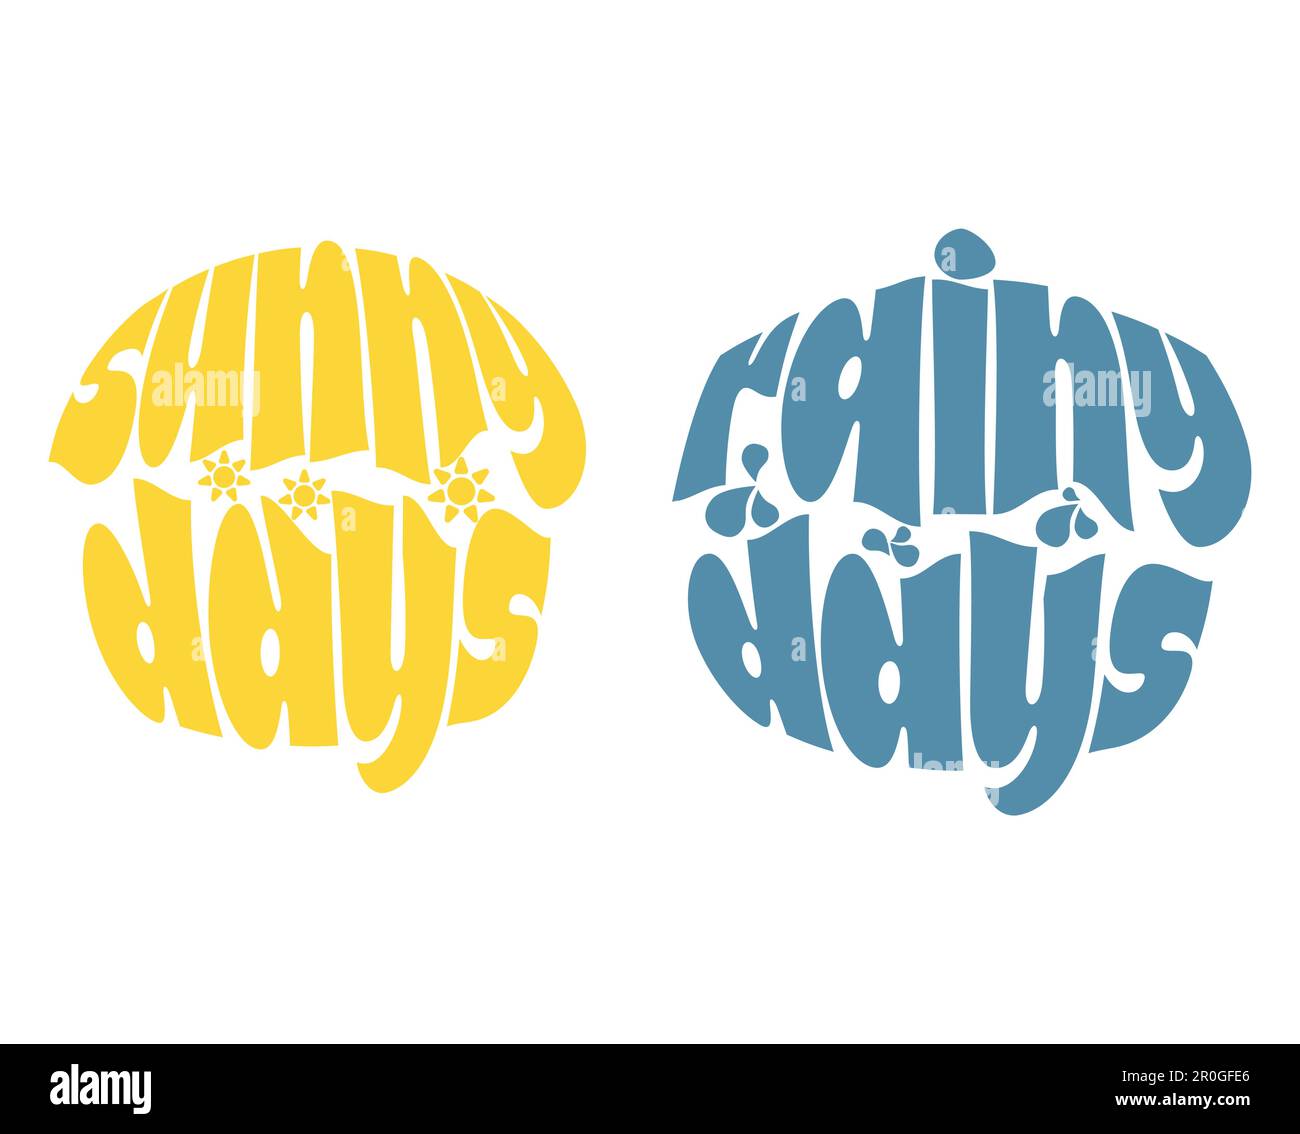 Phrases Sunny days Rainy days. Vector typography style illustration Stock Vector